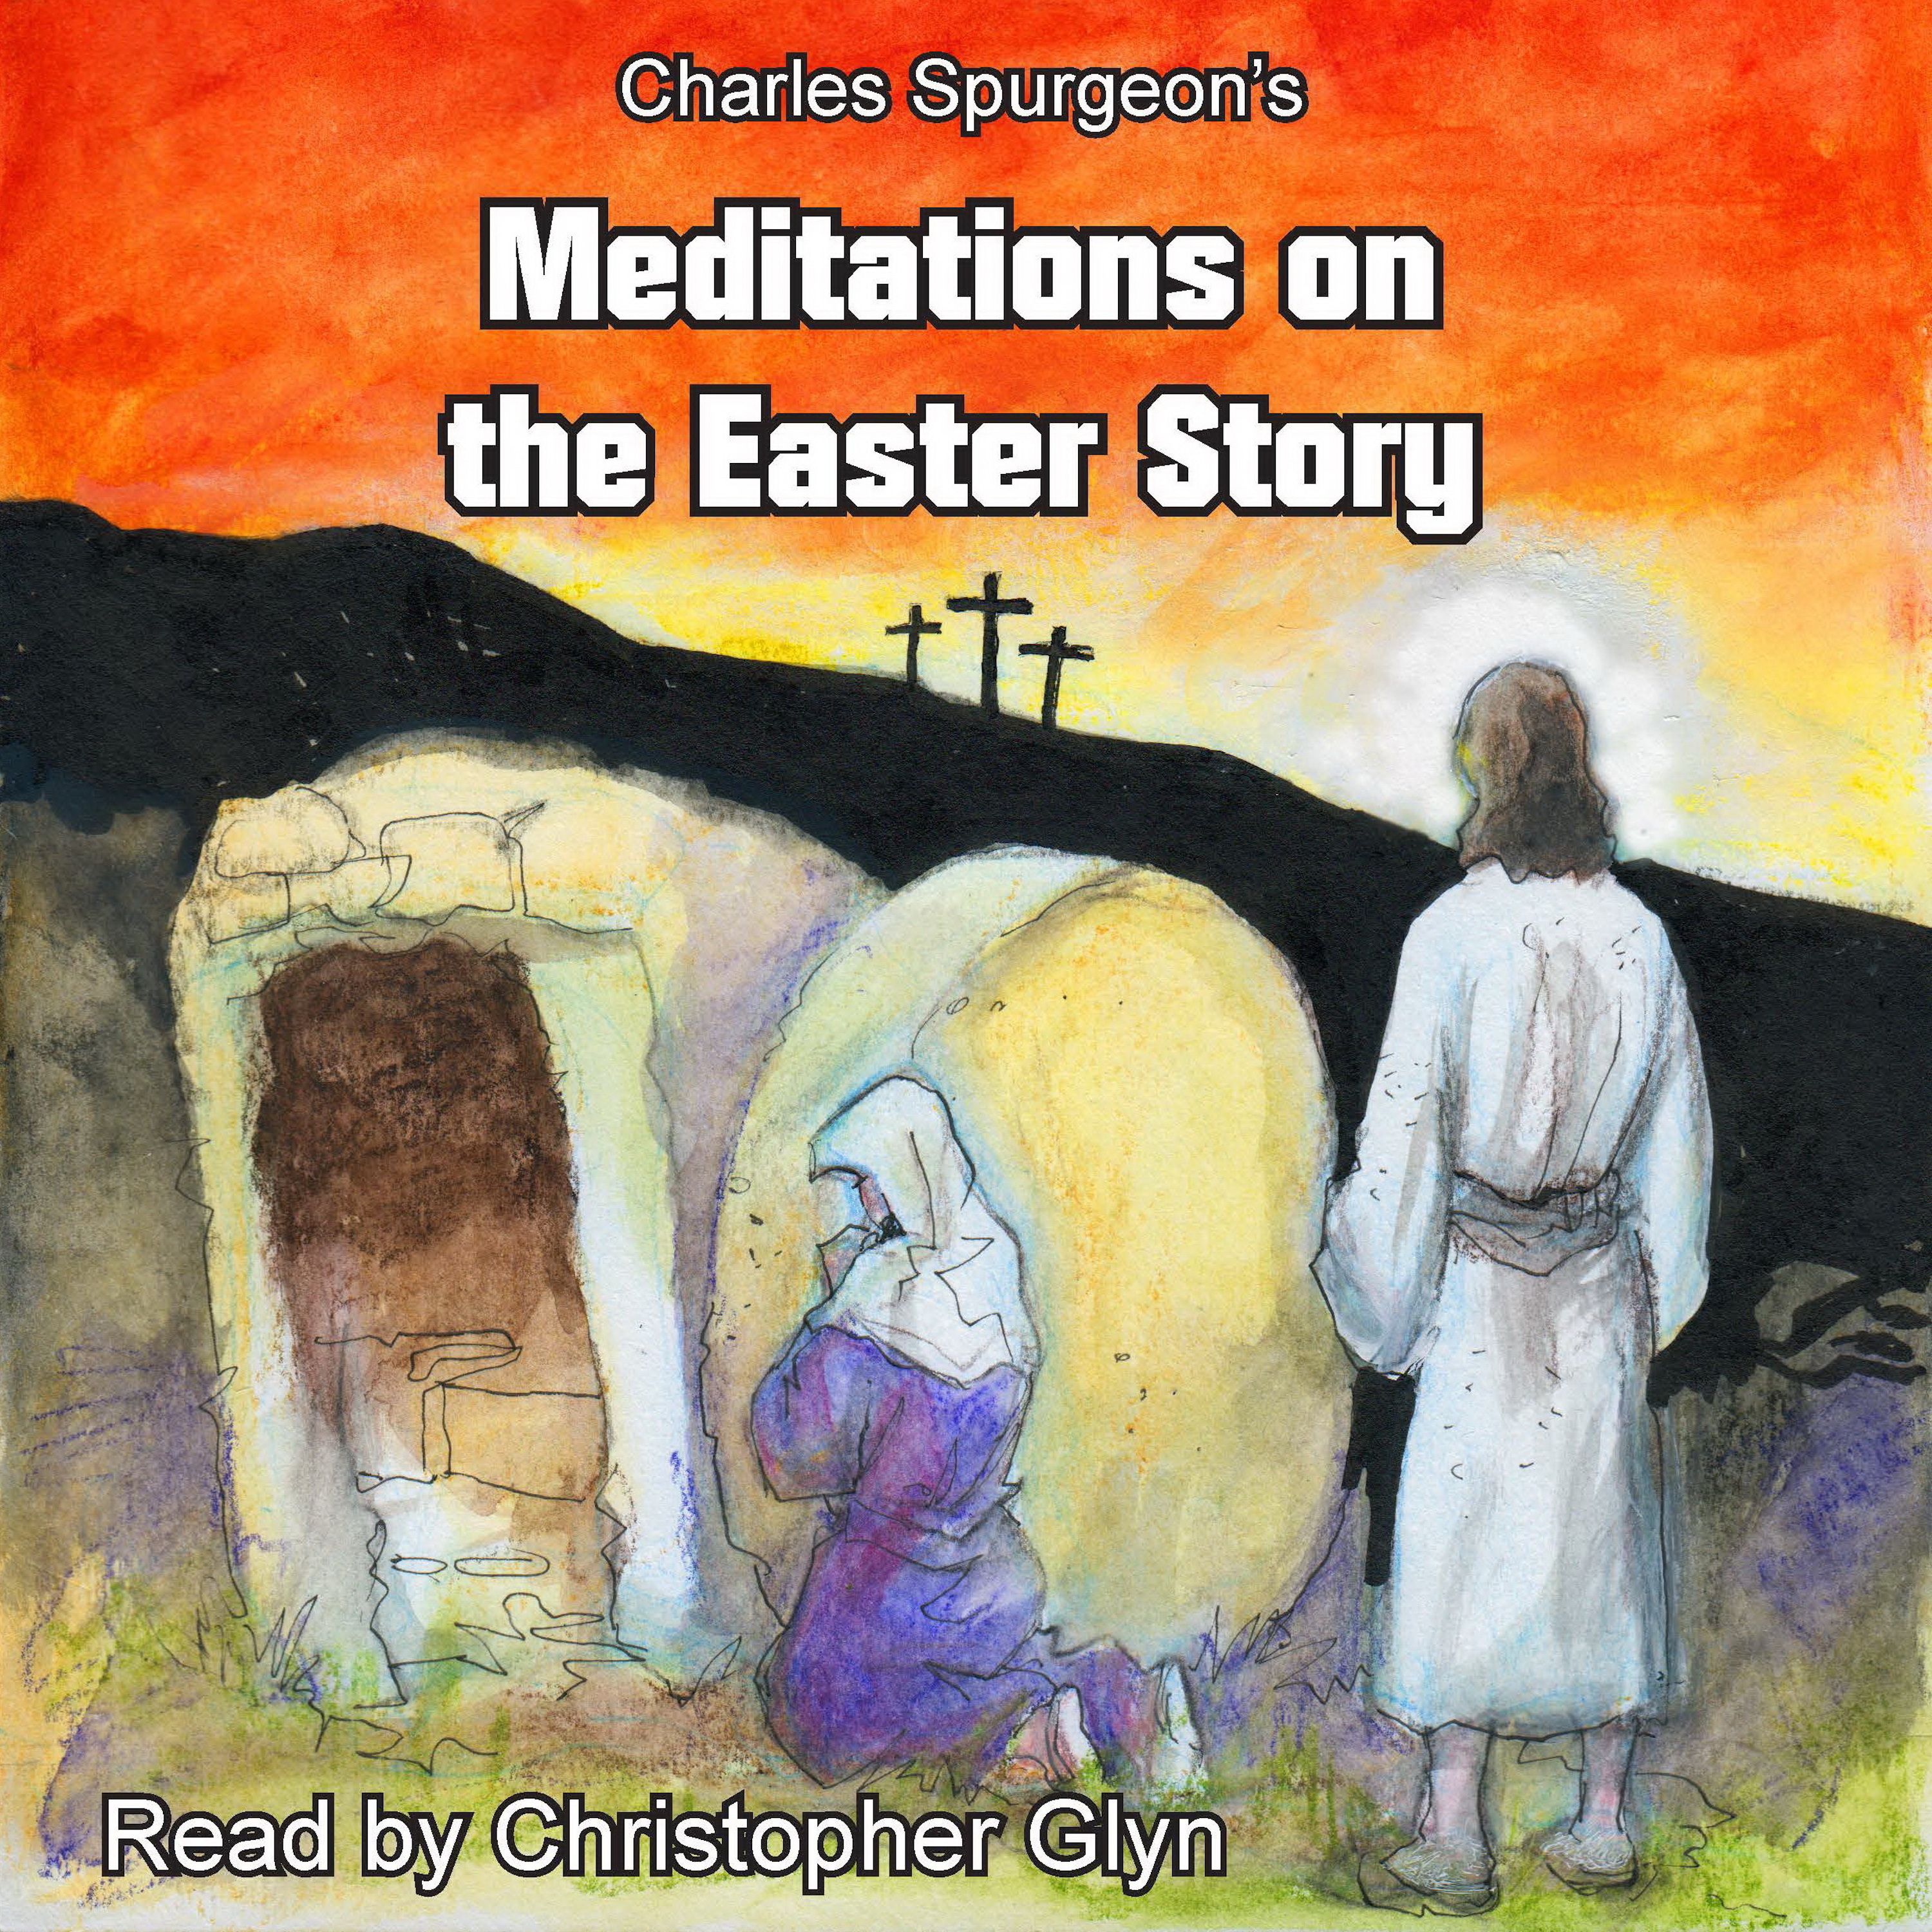 Charles Spurgeon's Meditations On The Easter Story, ljudbok av Charles Spurgeon